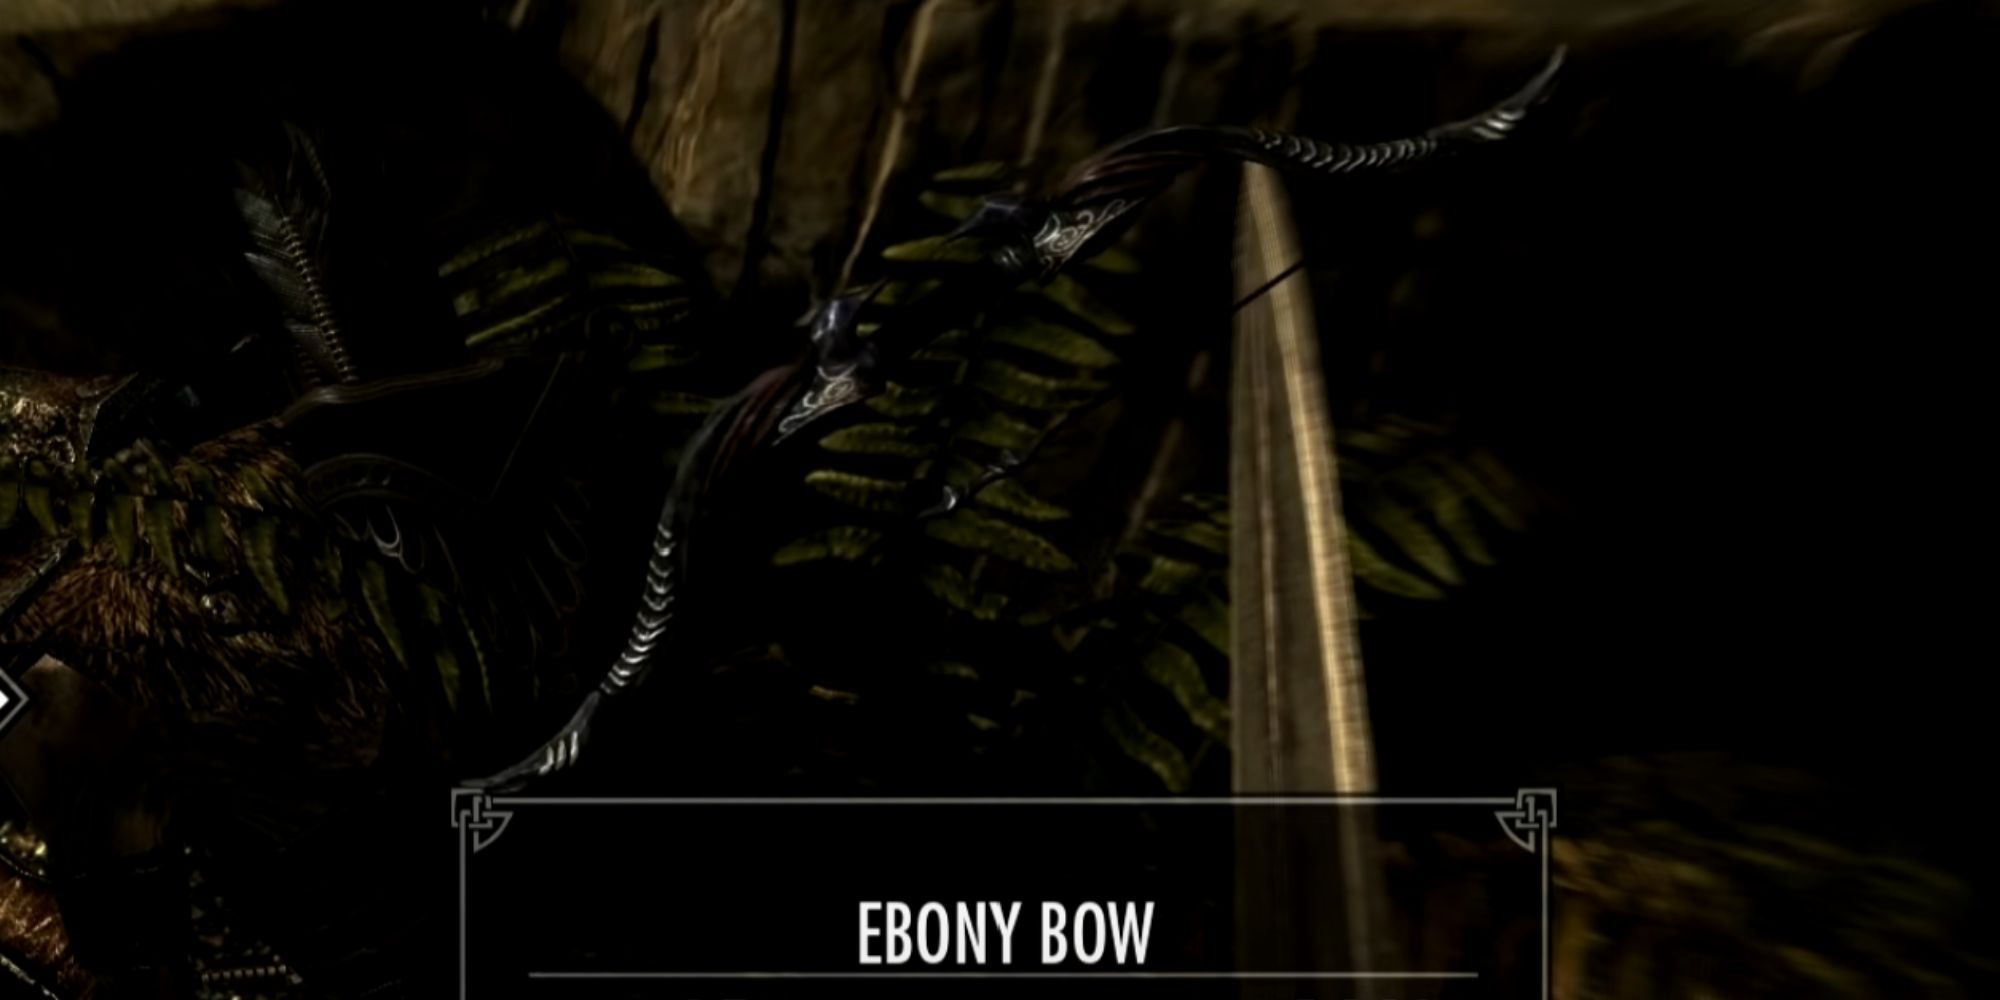 Skyrim Ebony Bow Inside Inventory